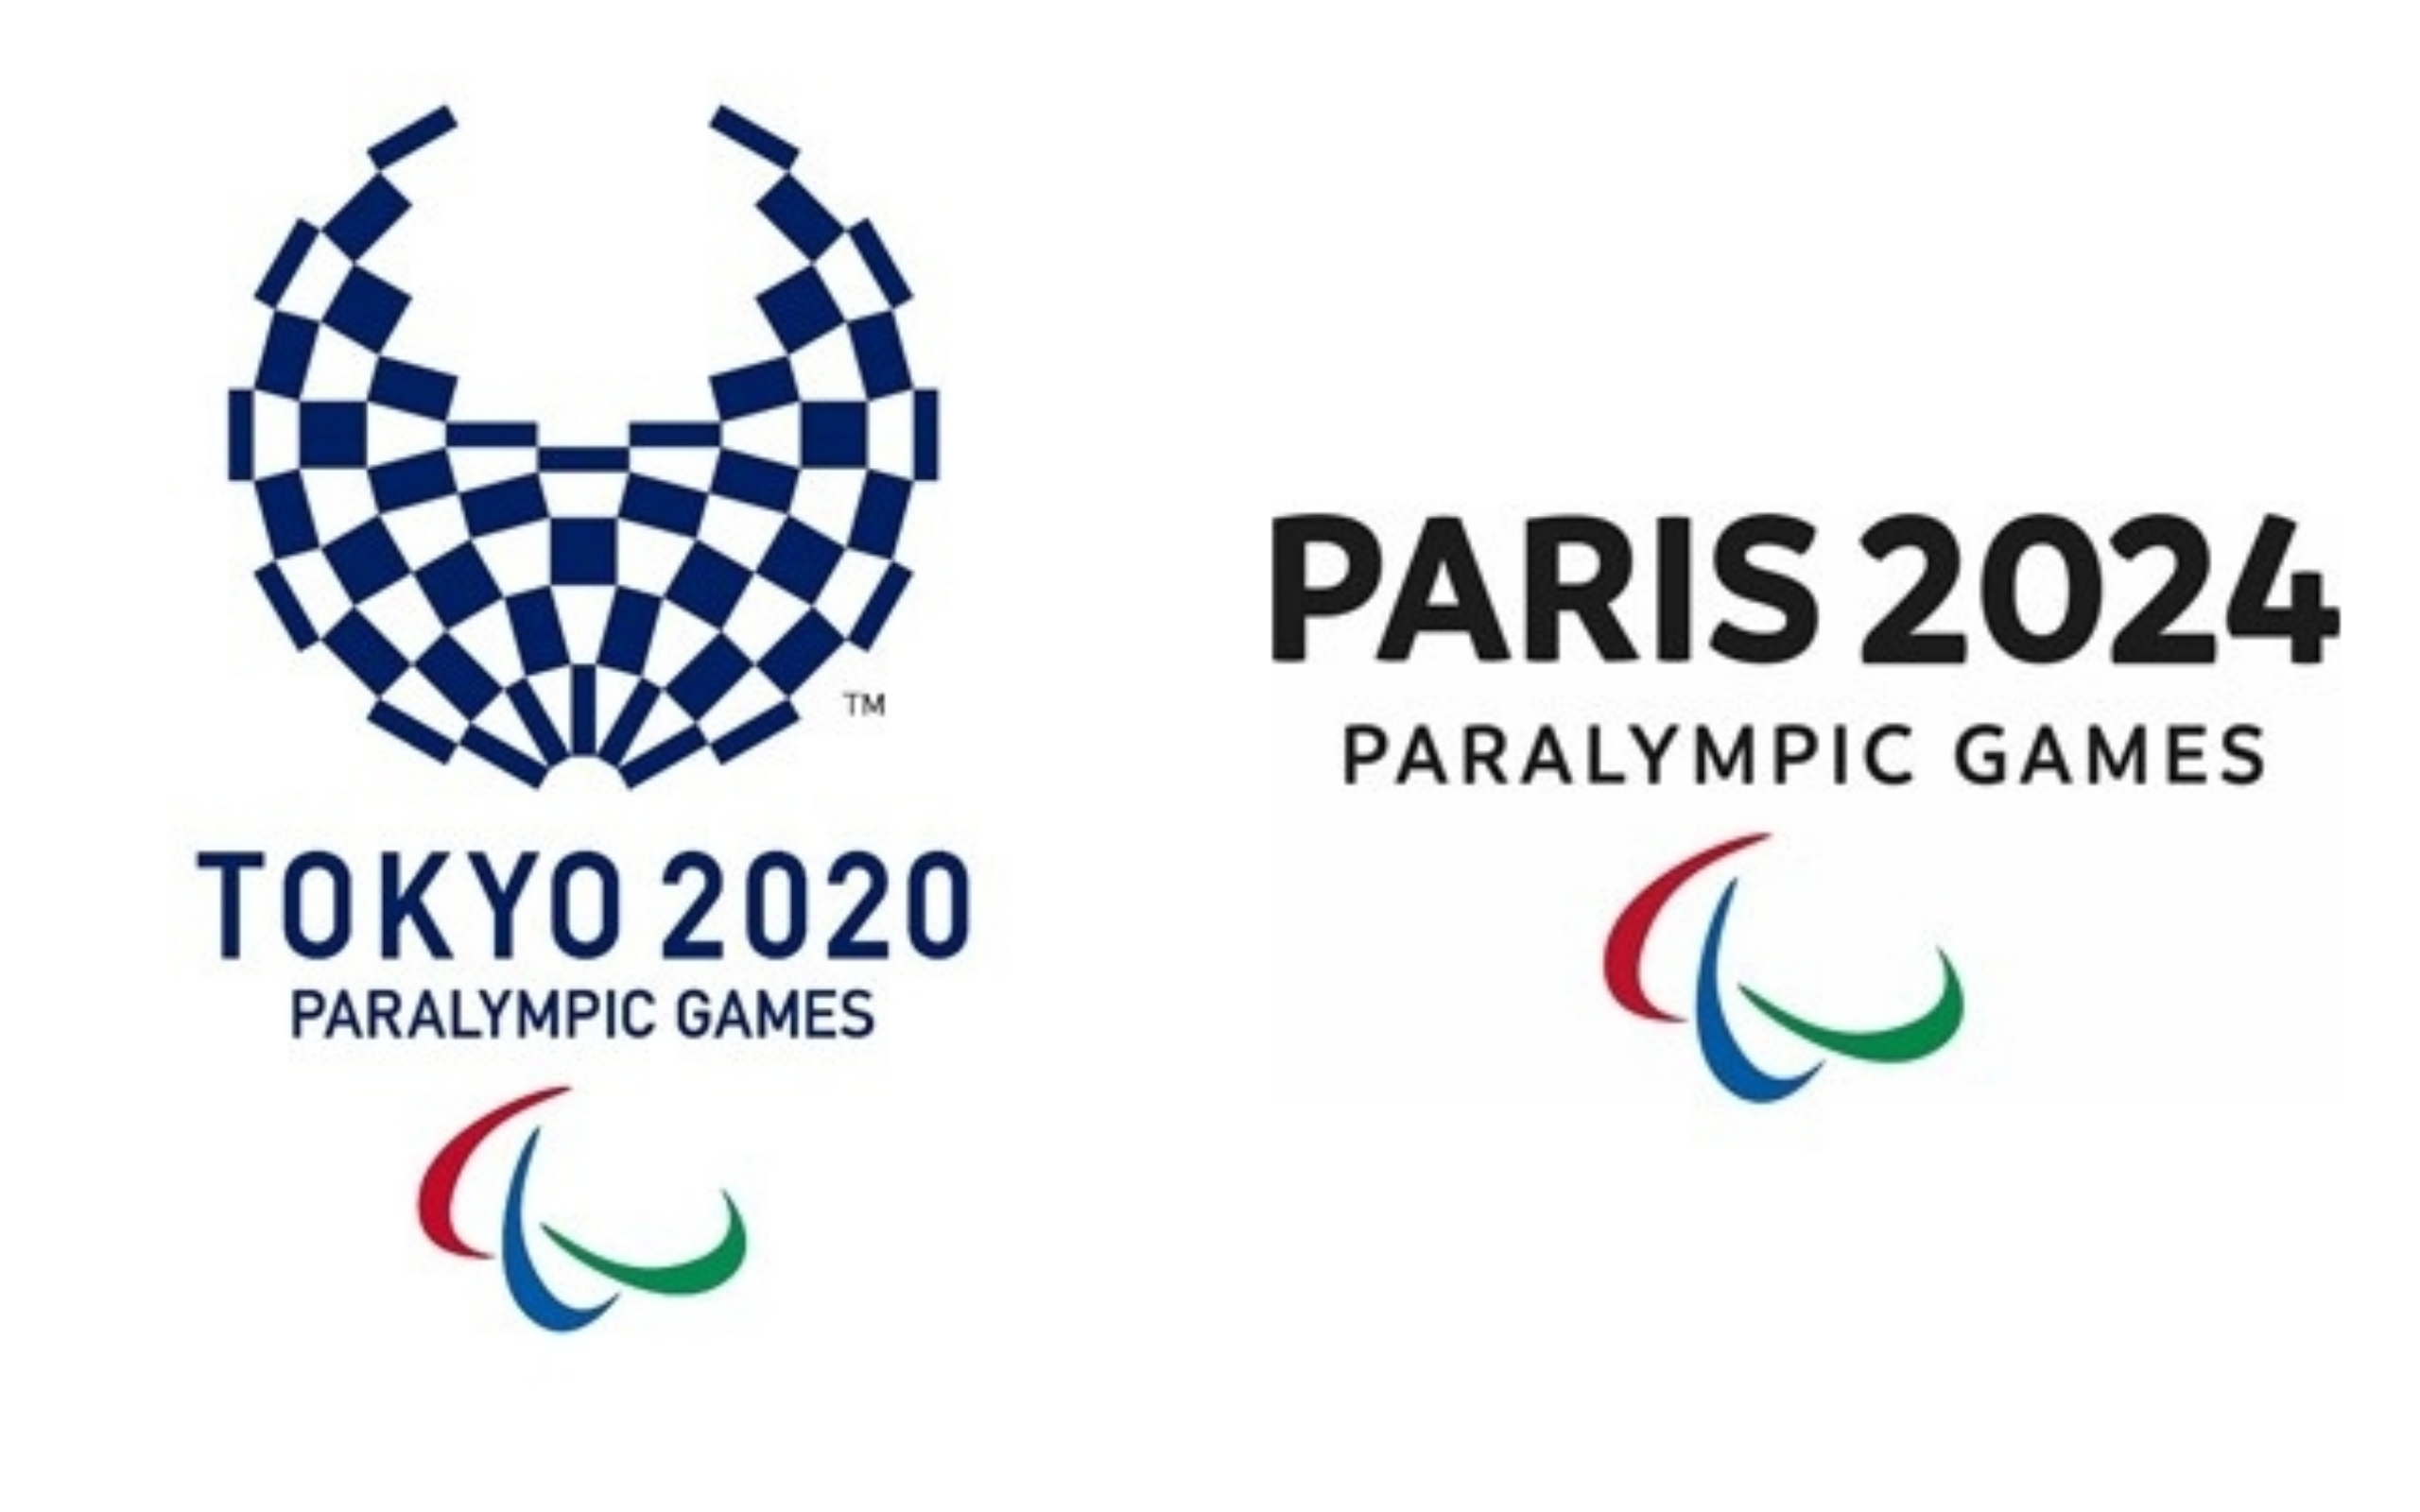 180711120001471 Paris 2024 Tokyo 2020 Emblems 